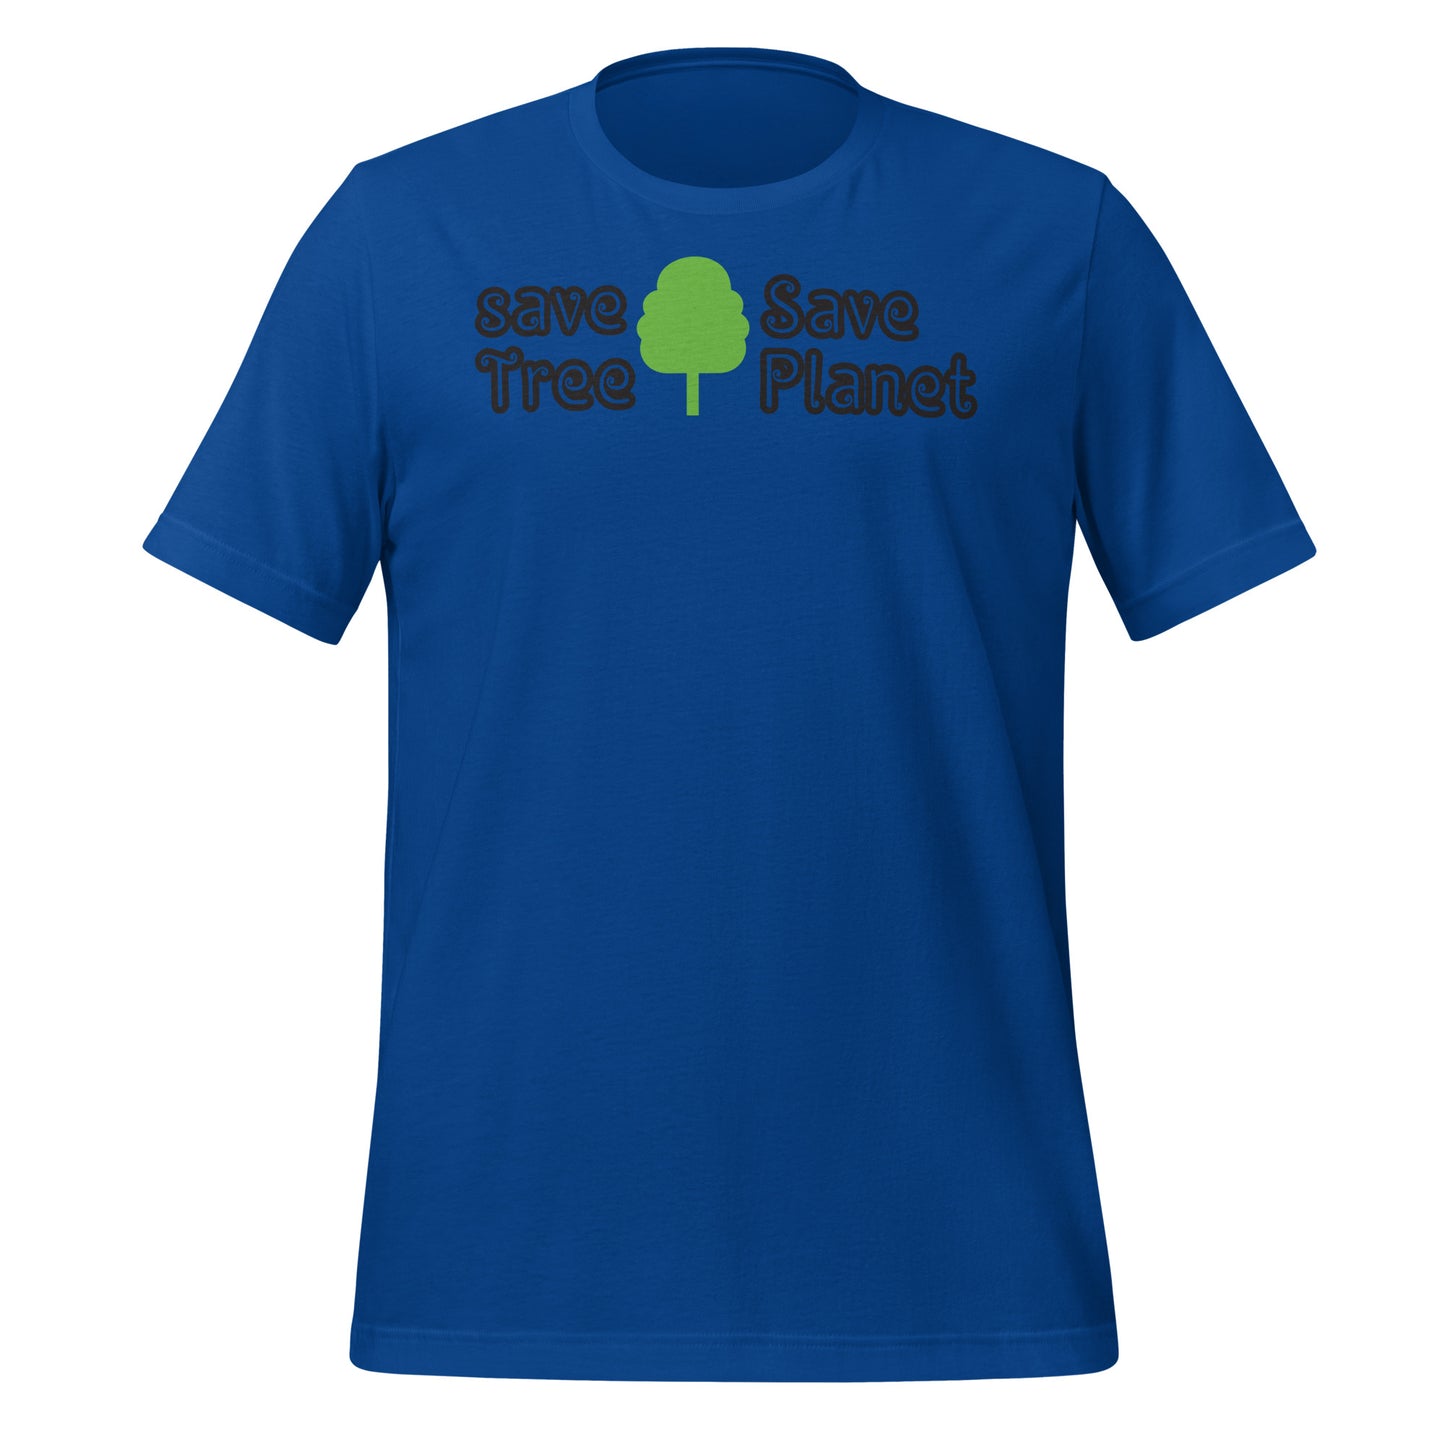 Eco-Friendly 'Save Tree Save Planet' T-Shirt